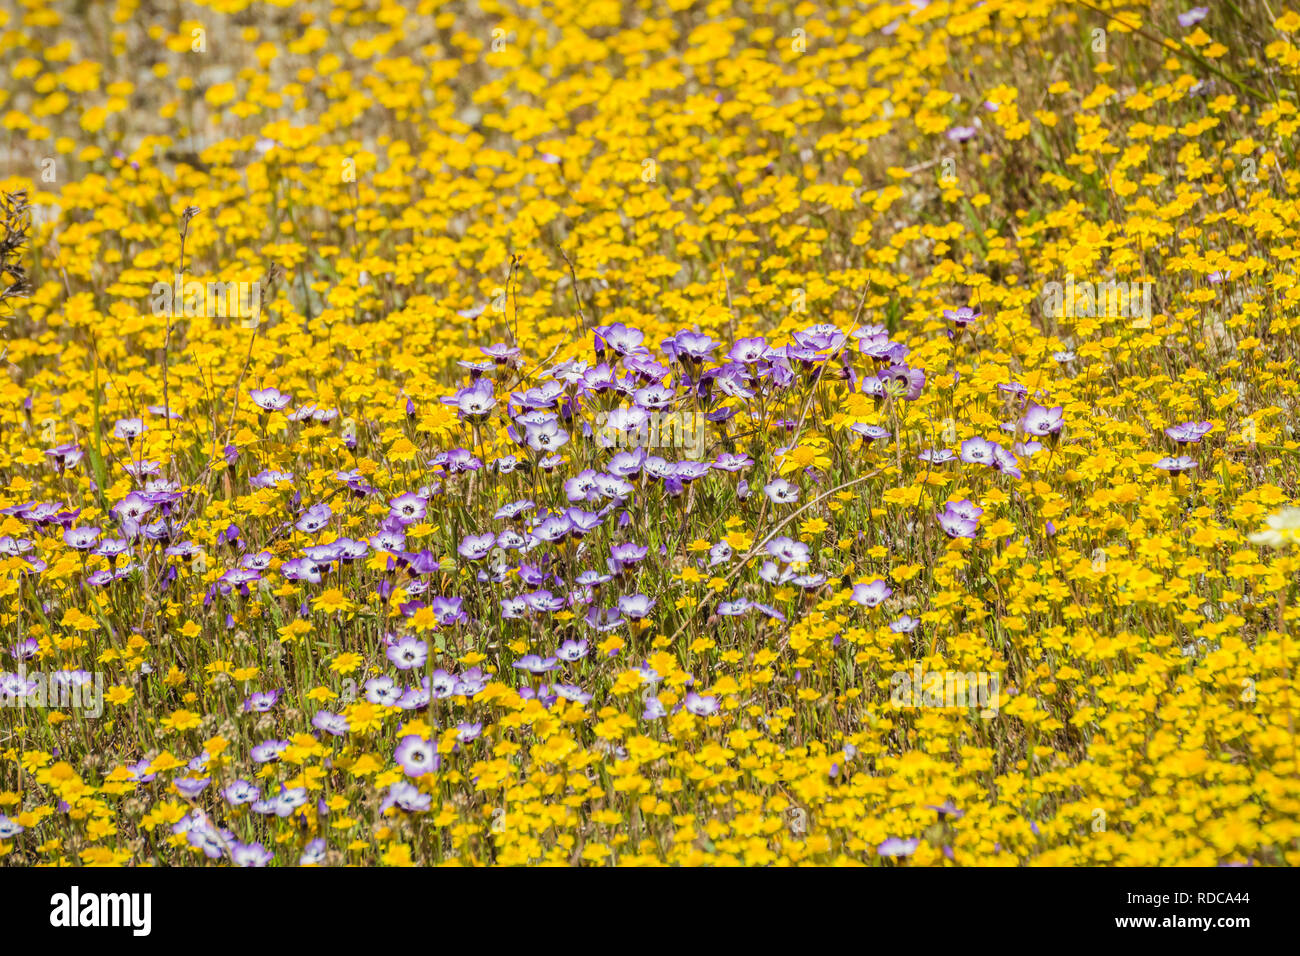 Gilia wildflowers blooming among goldfields, California Stock Photo